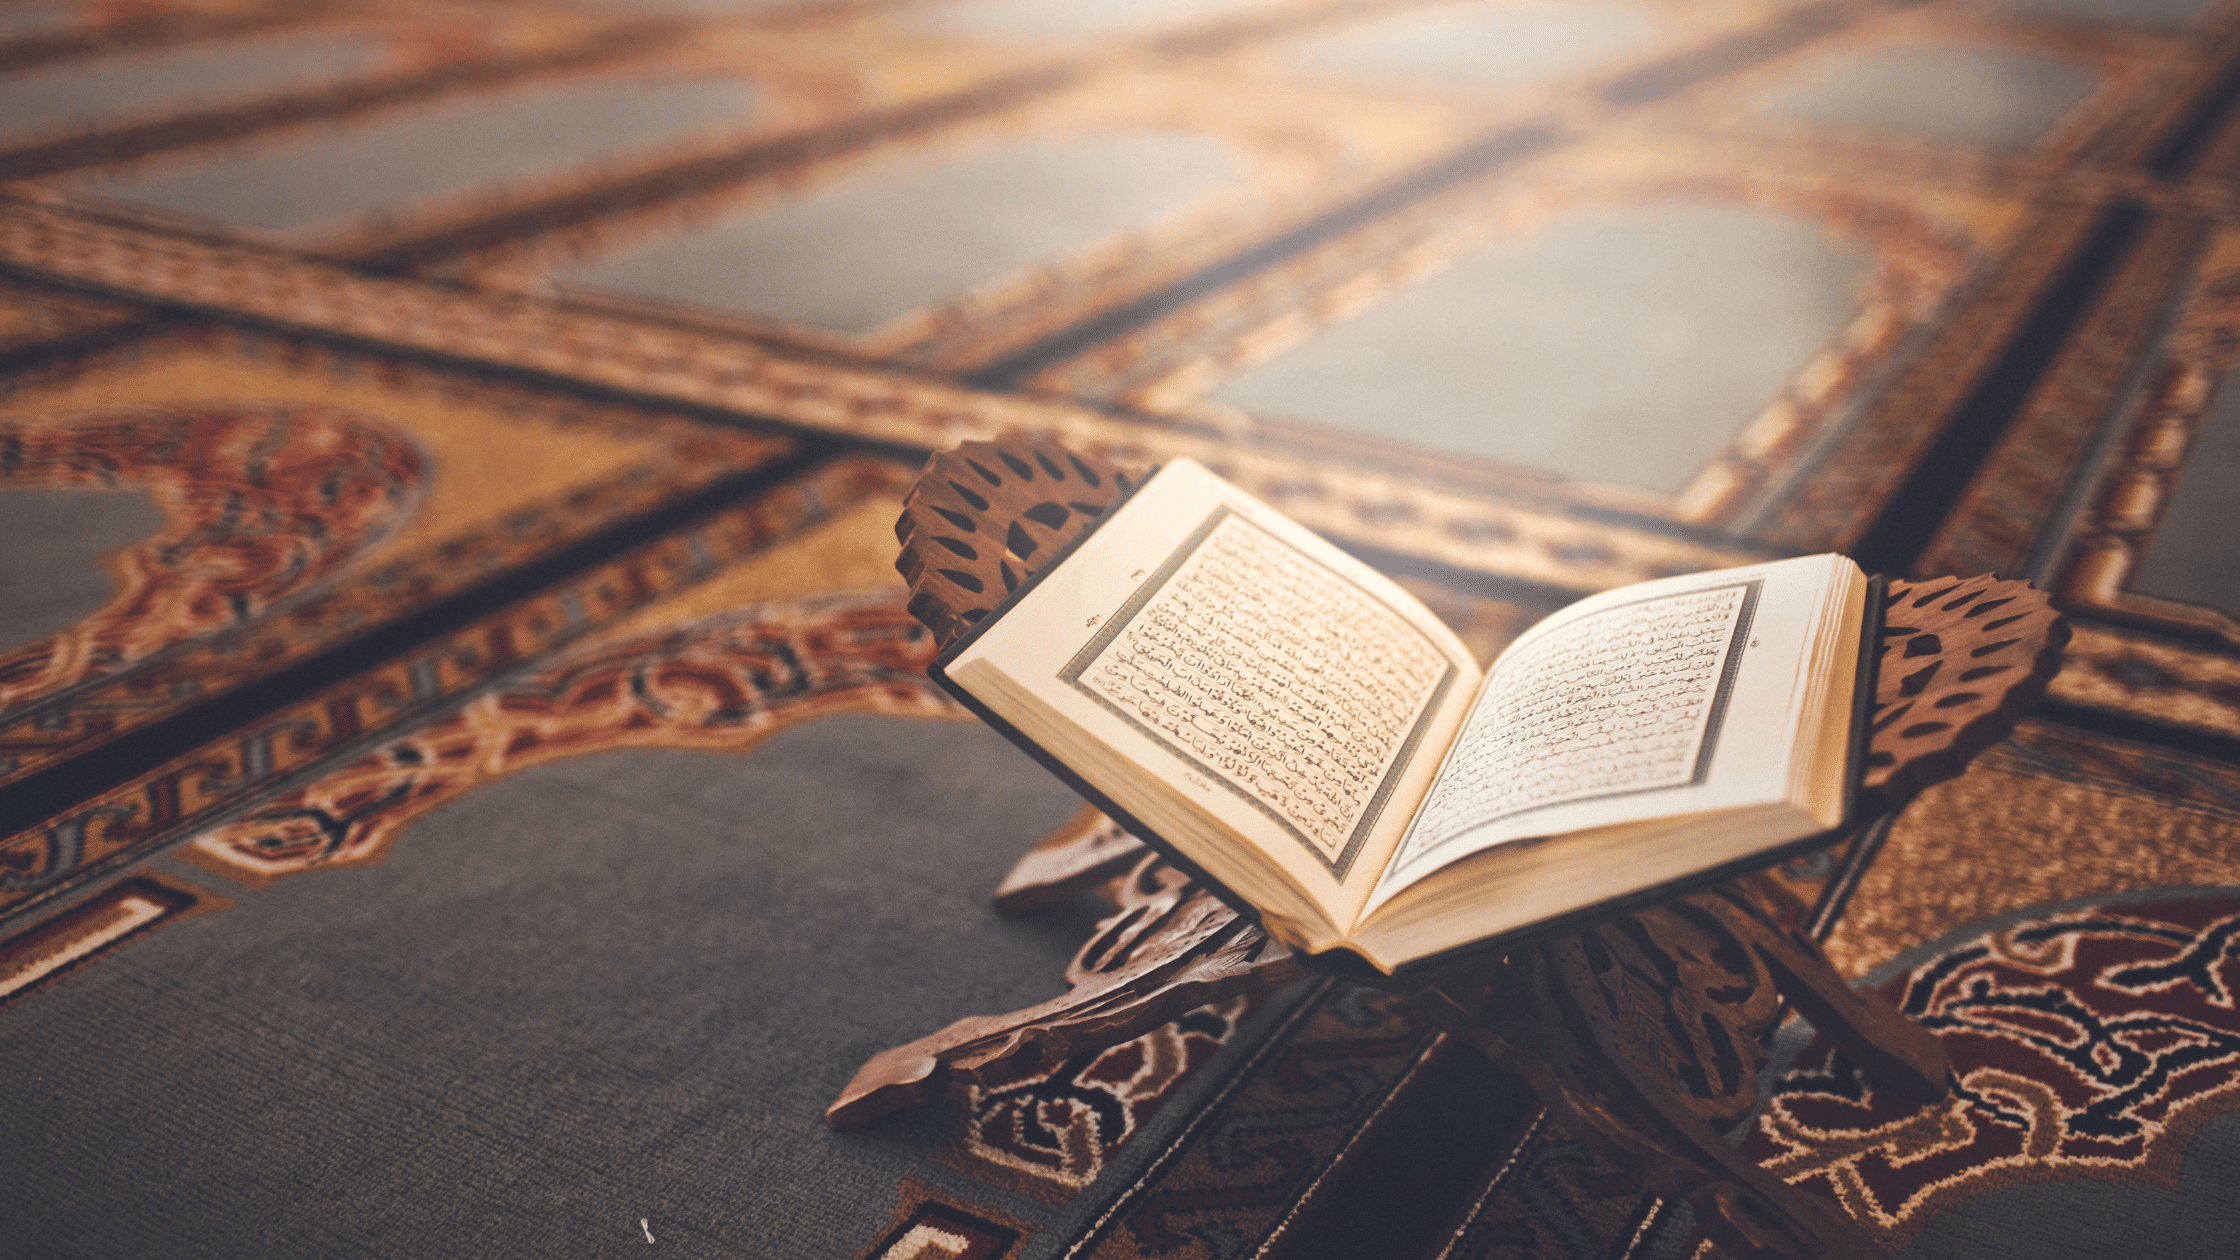 Islam book resting open ready for prayer.